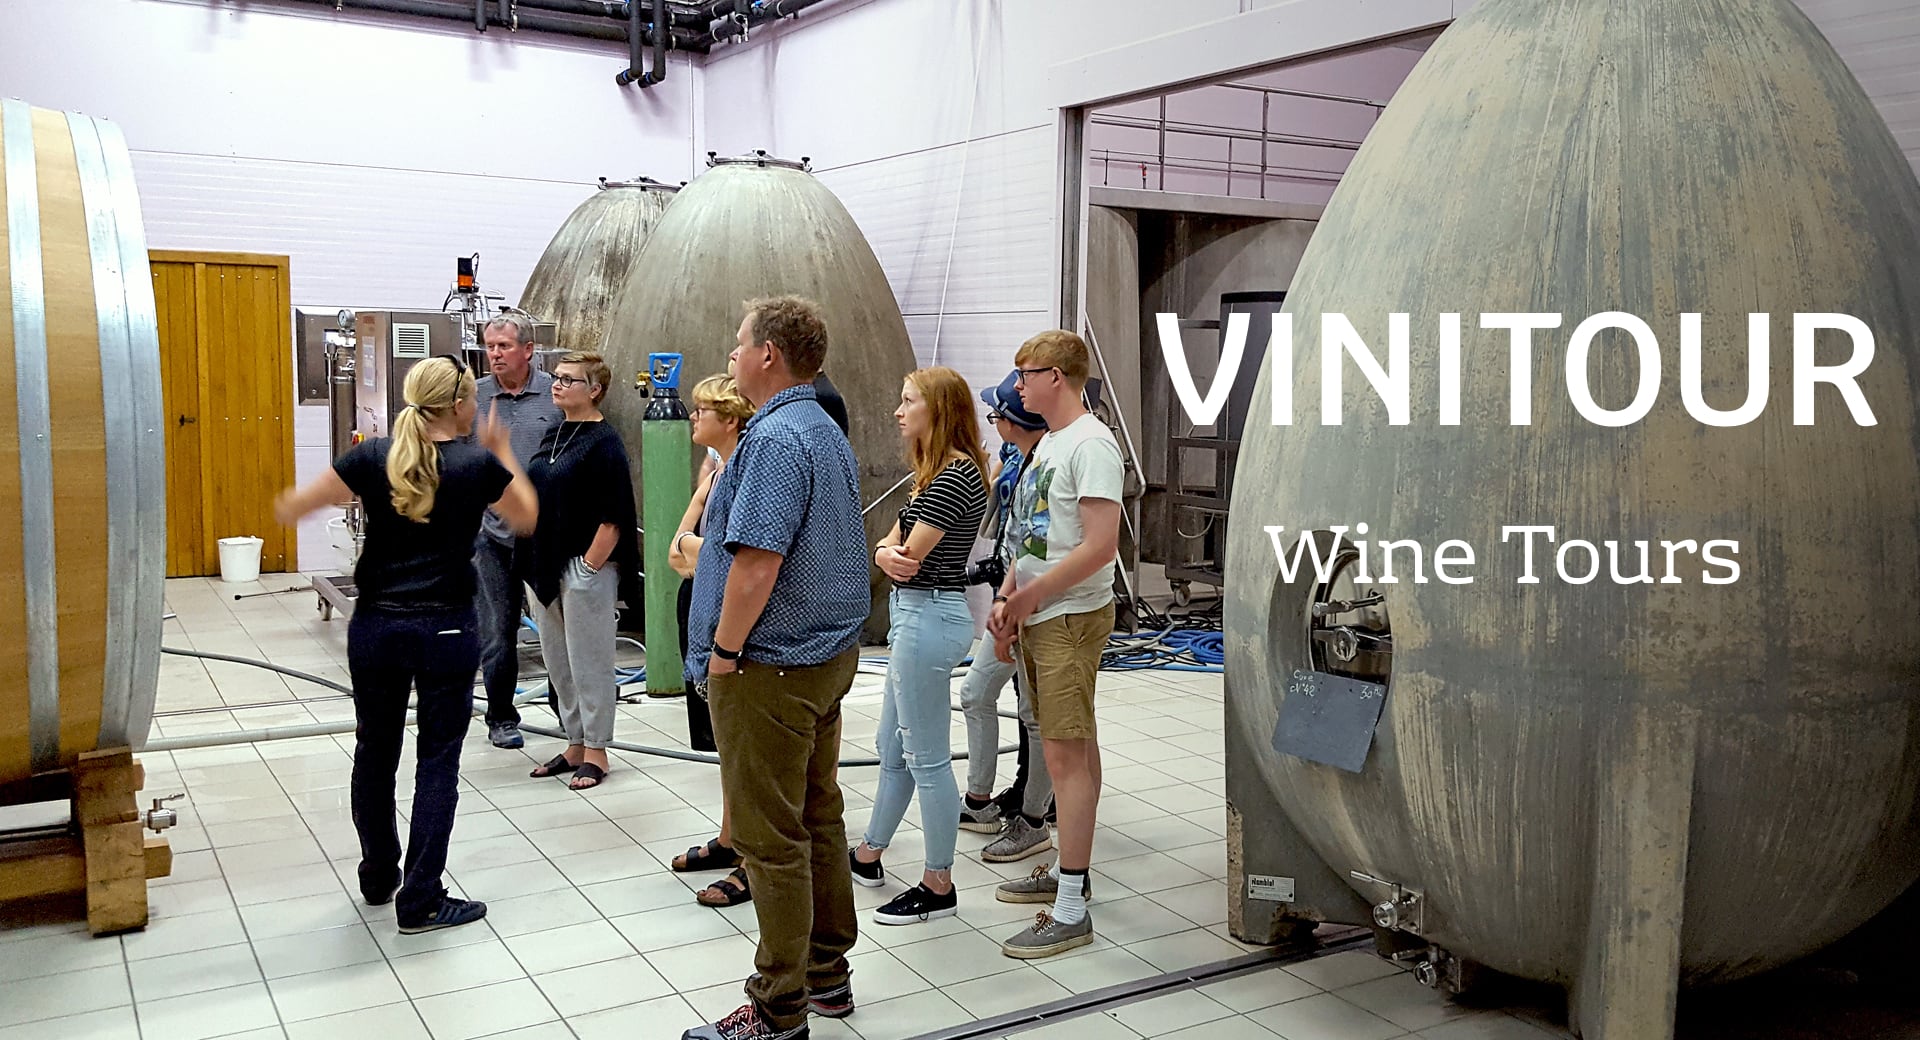 vinitour wine tours in the wine cellar